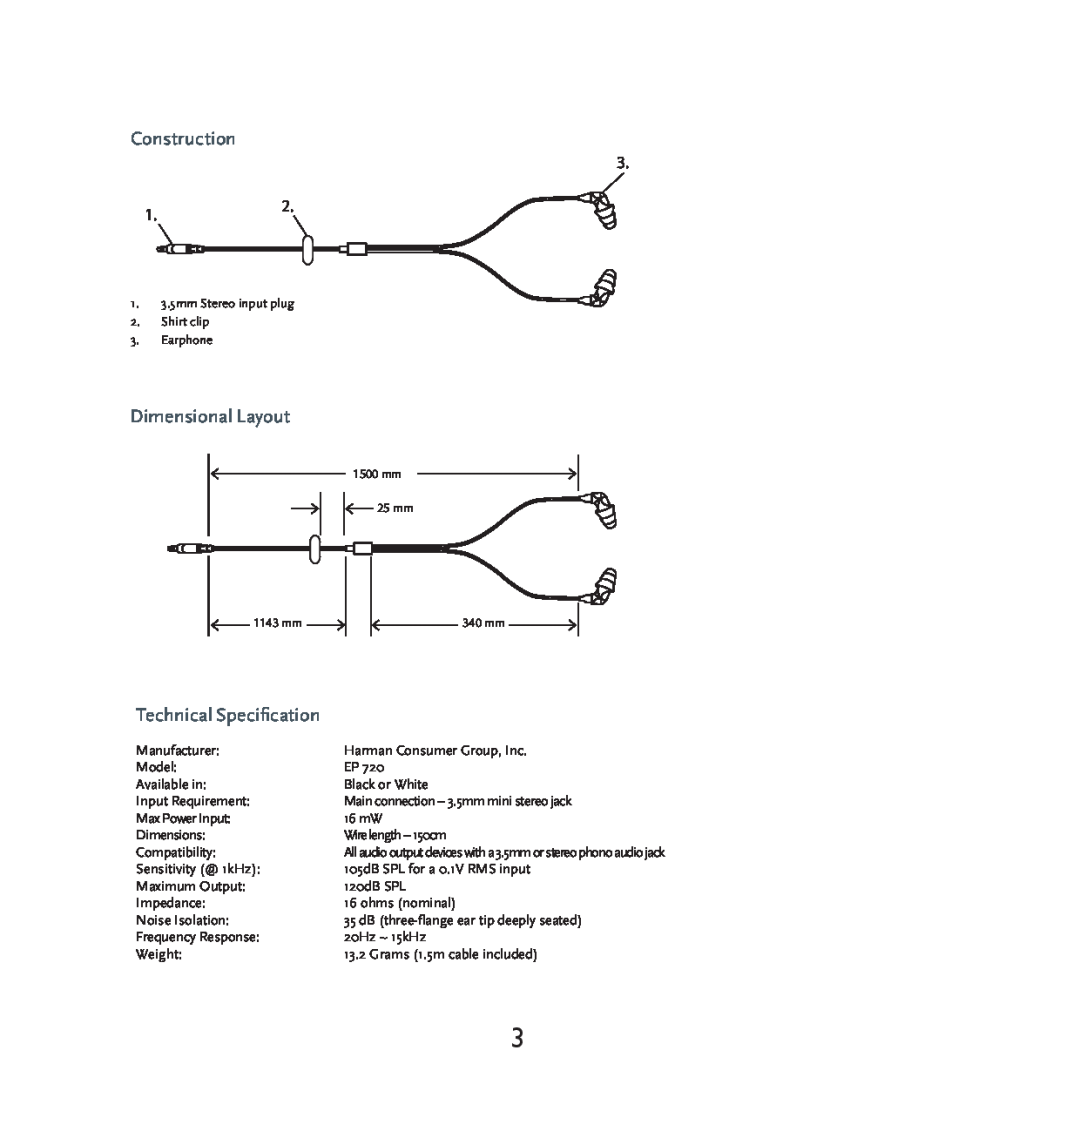 Harman-Kardon ep720 manual Construction, Dimensional Layout, Technical Specification 